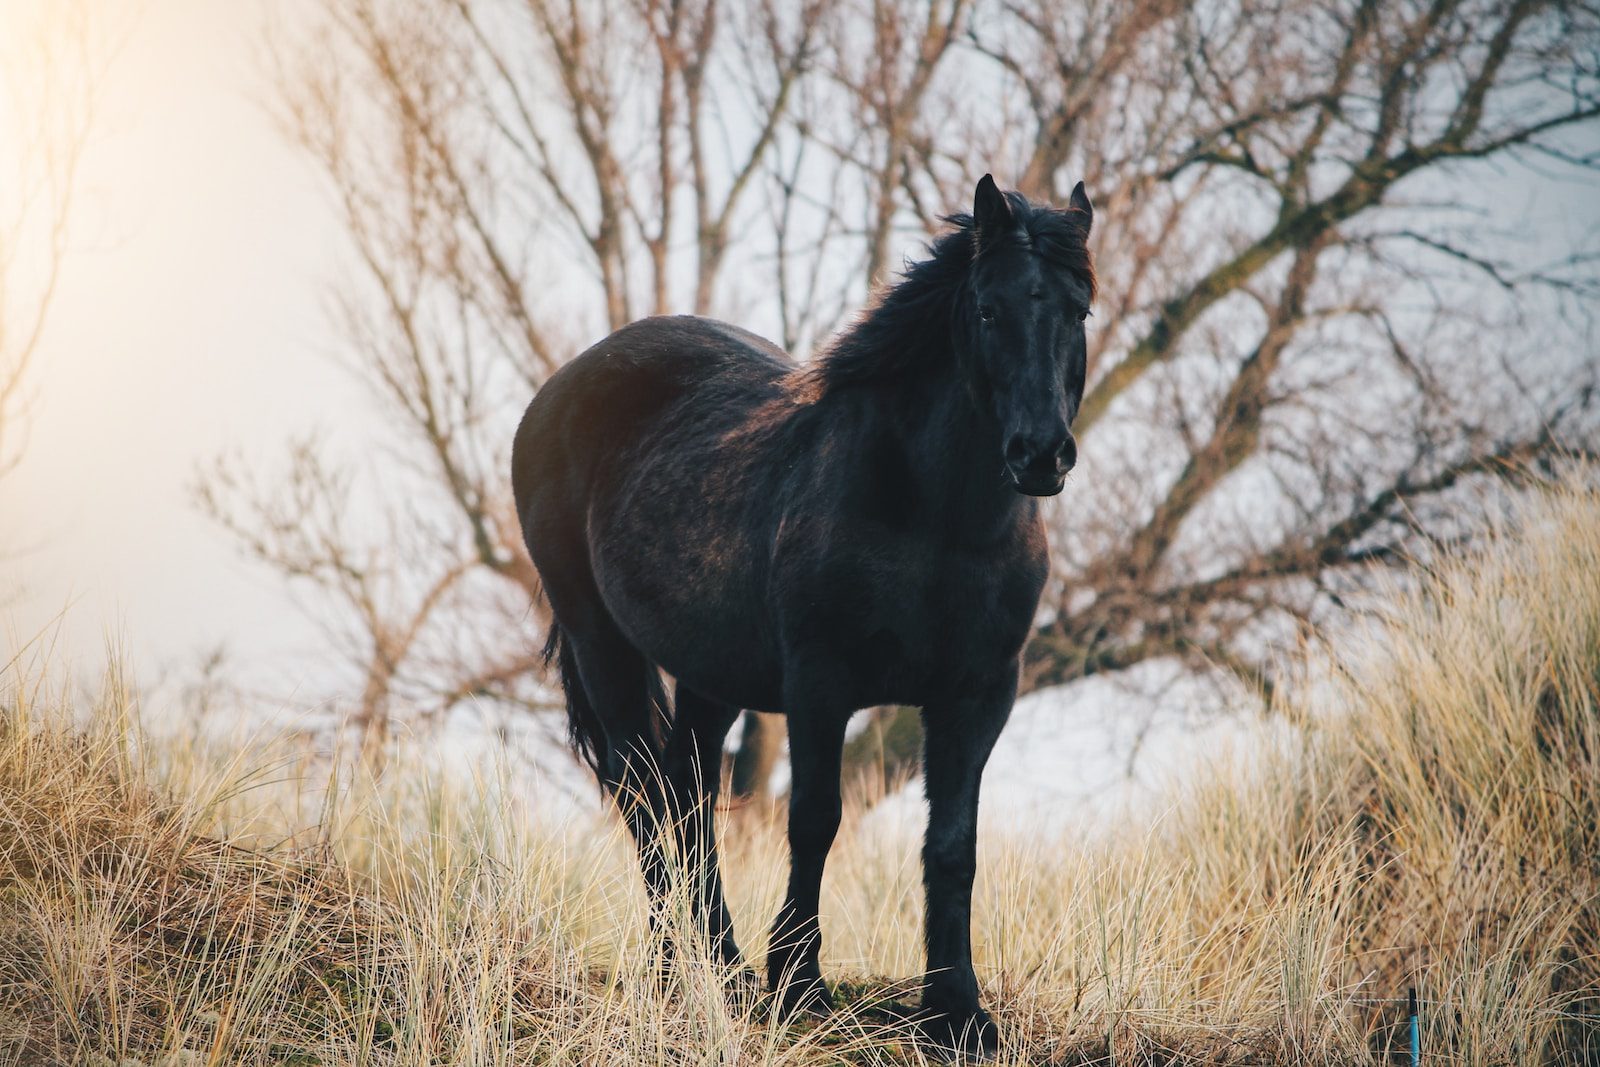 black horse breed on grass field near bare tree